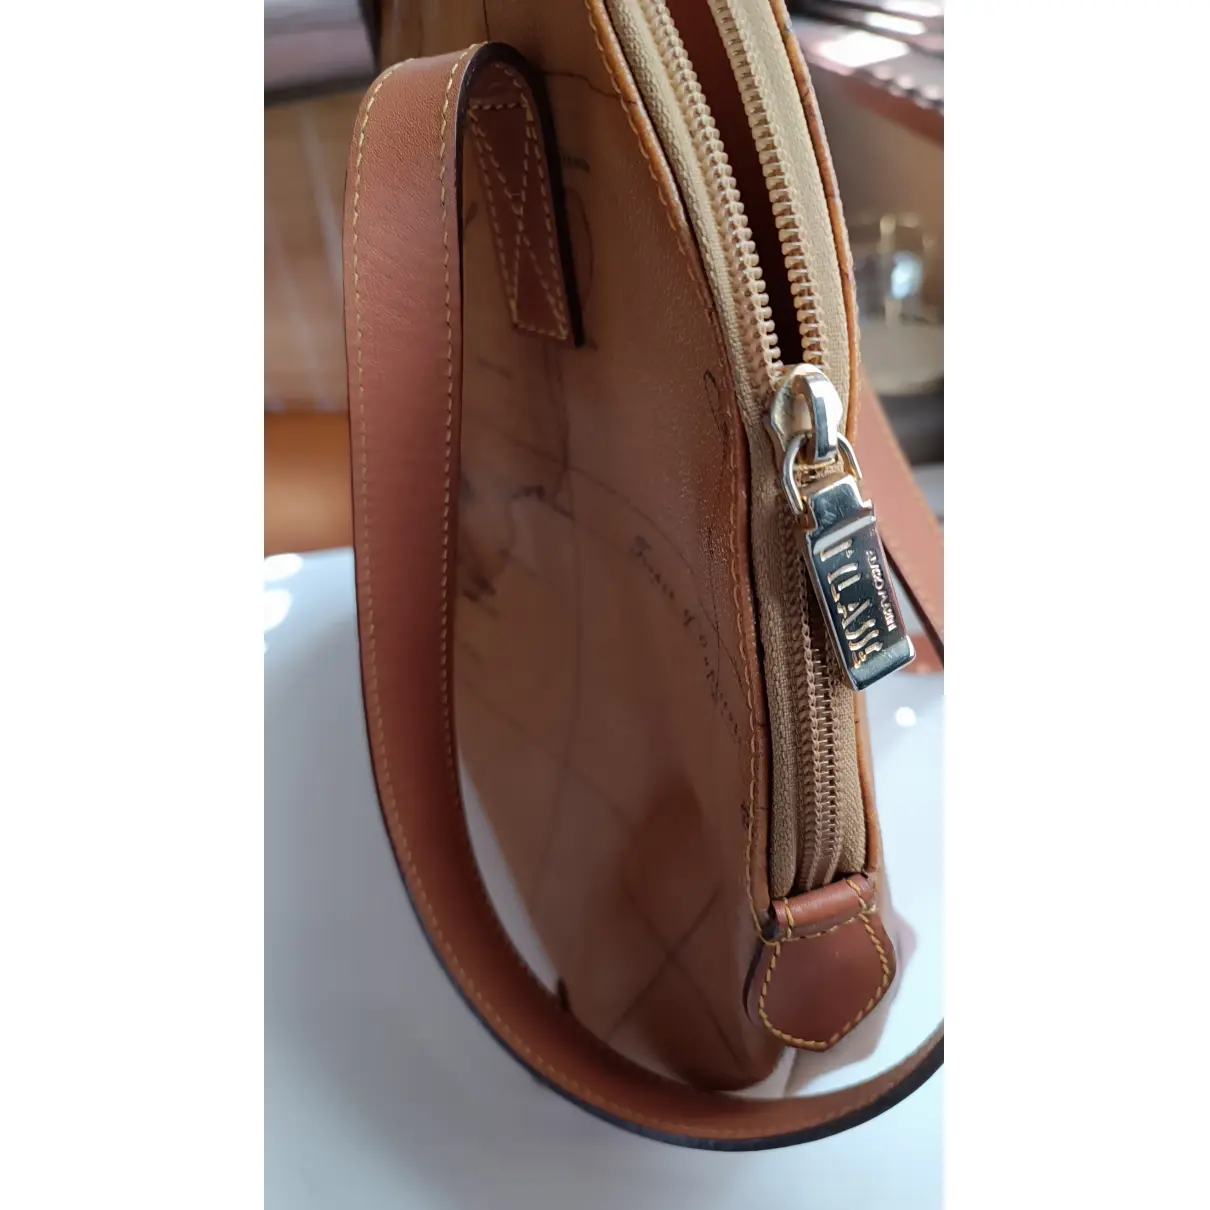 Leather handbag Prima classe